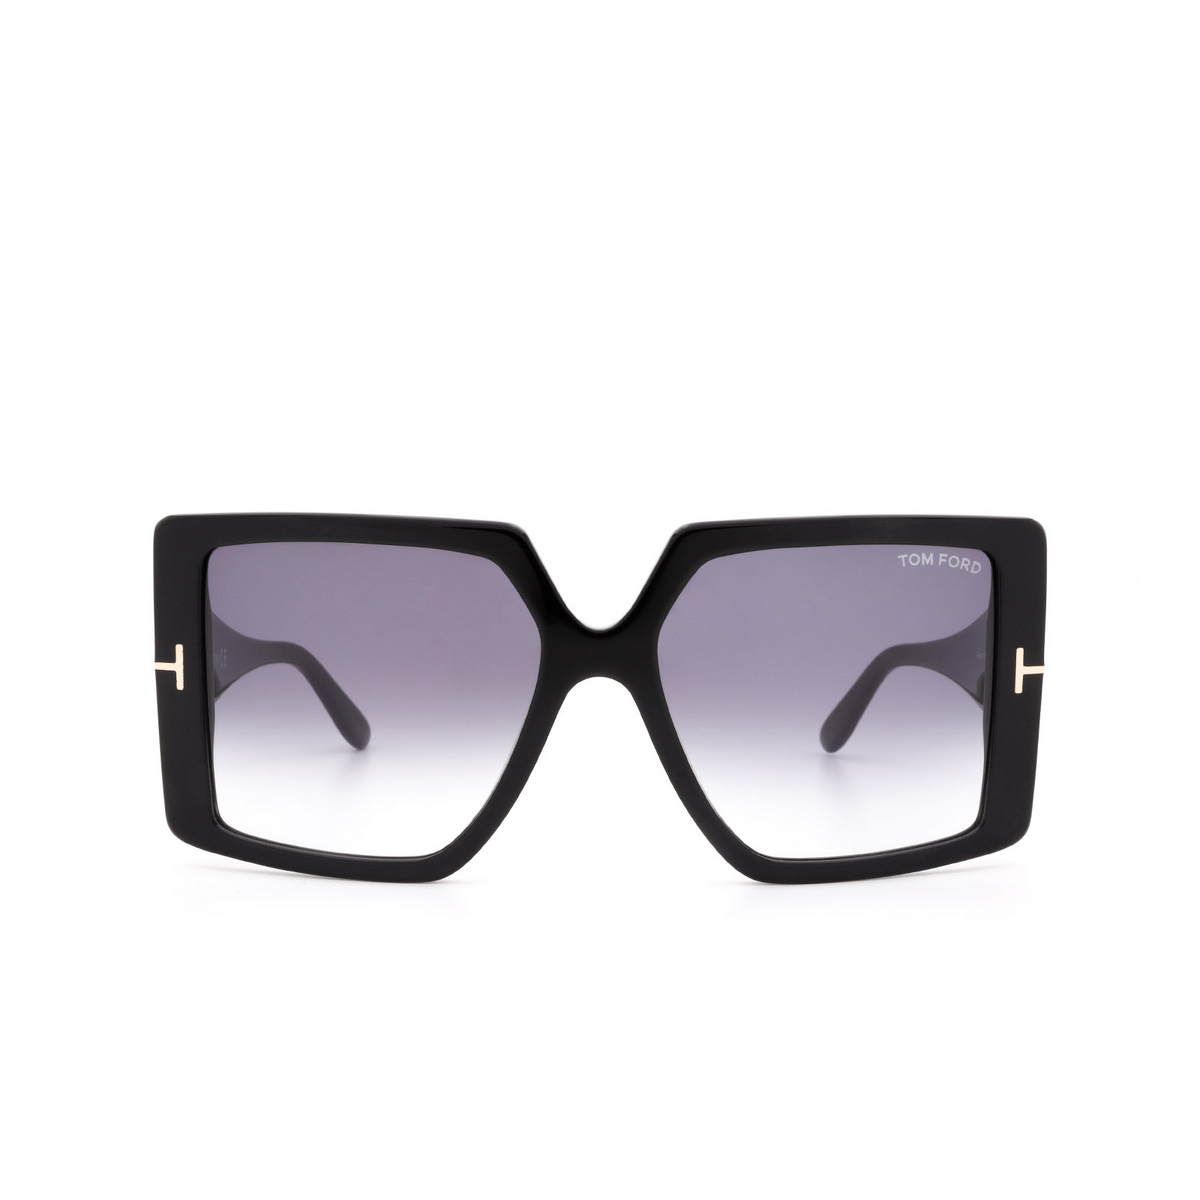 Tom Ford QUINN Sunglasses 01B Shiny Black - front view